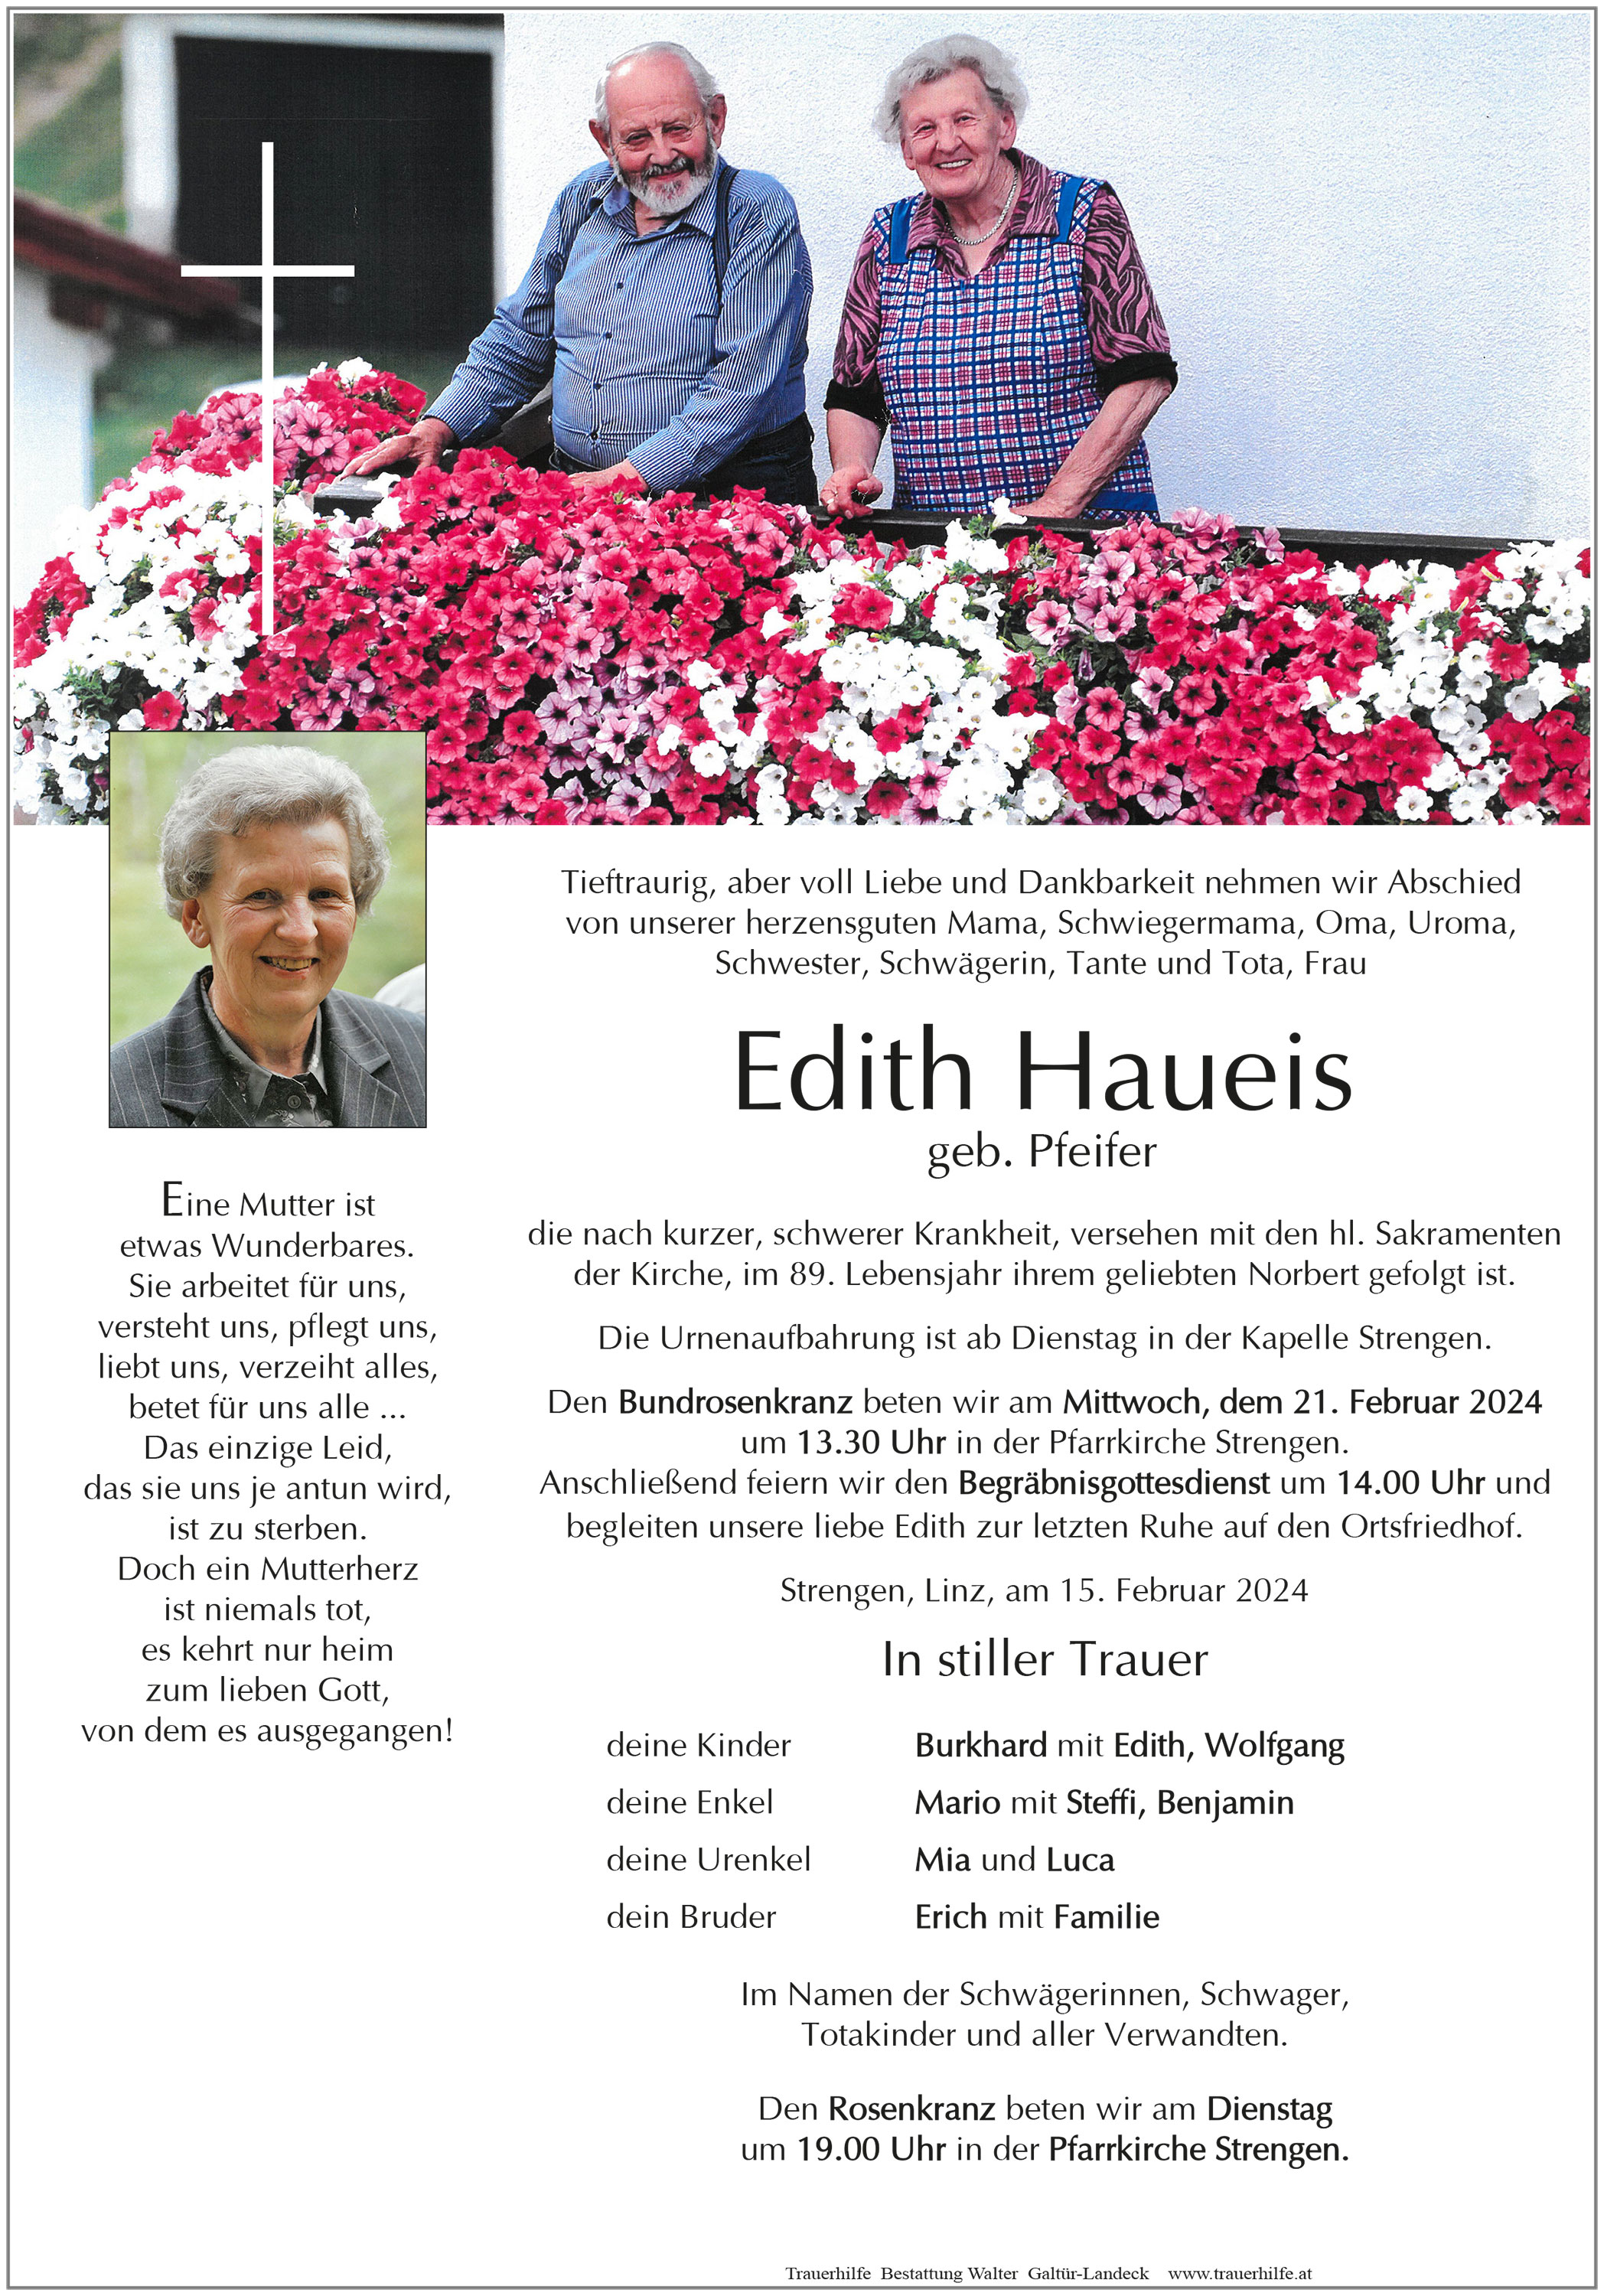 Edith Haueis